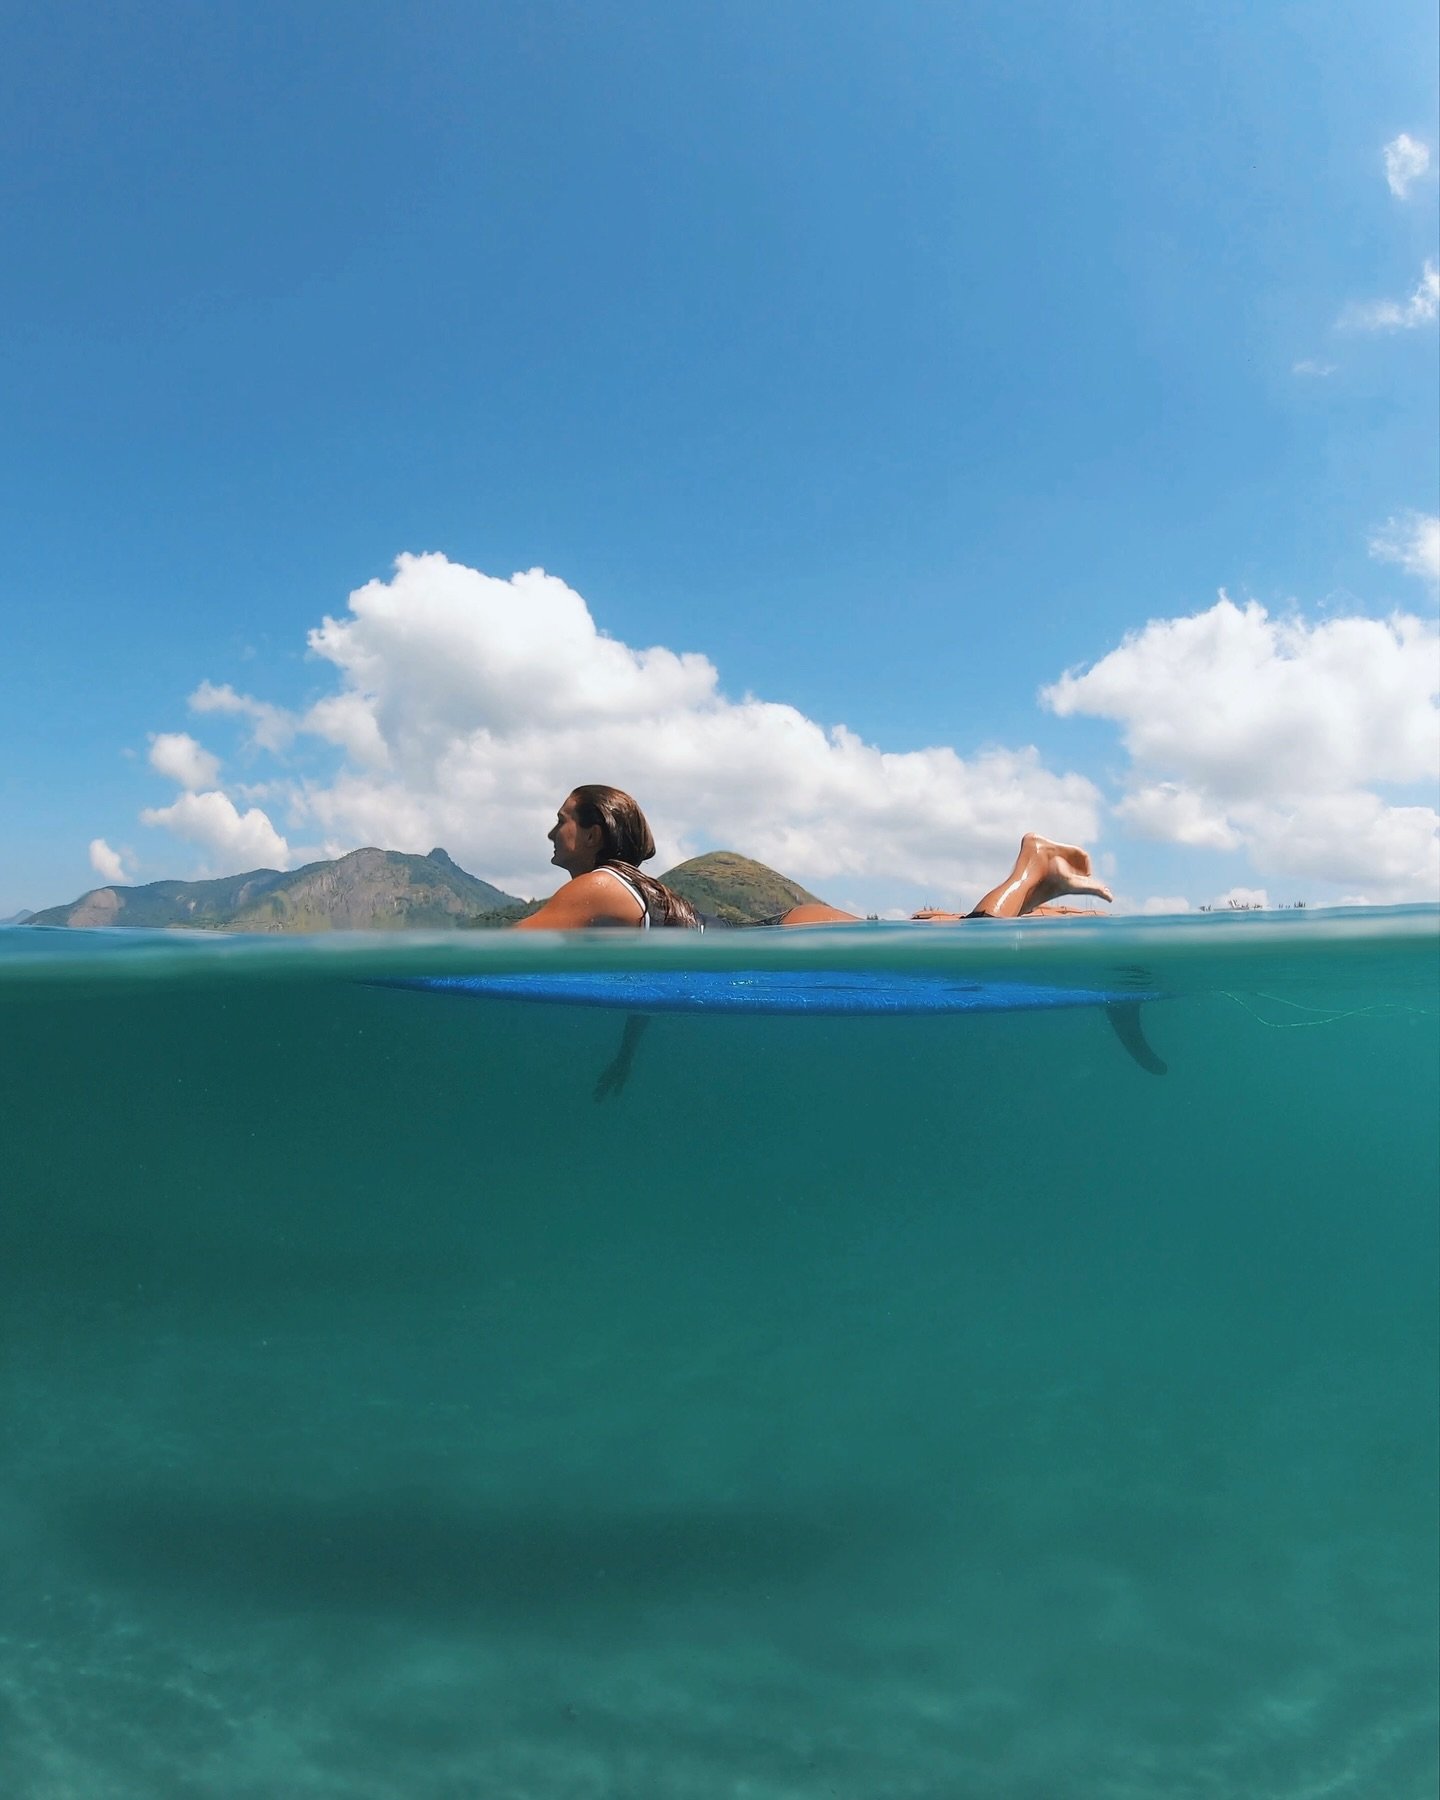 Finding peace in keeping things balanced.

One of my favourite GoPro pictures. 🦋

#surf #surflife #surfgirl #surfgirlmagazine #gopro #goprohero #ocean #oceanlover #praia #surfdays #riosurfcheck #riodejaneiro #nature #naturelovers